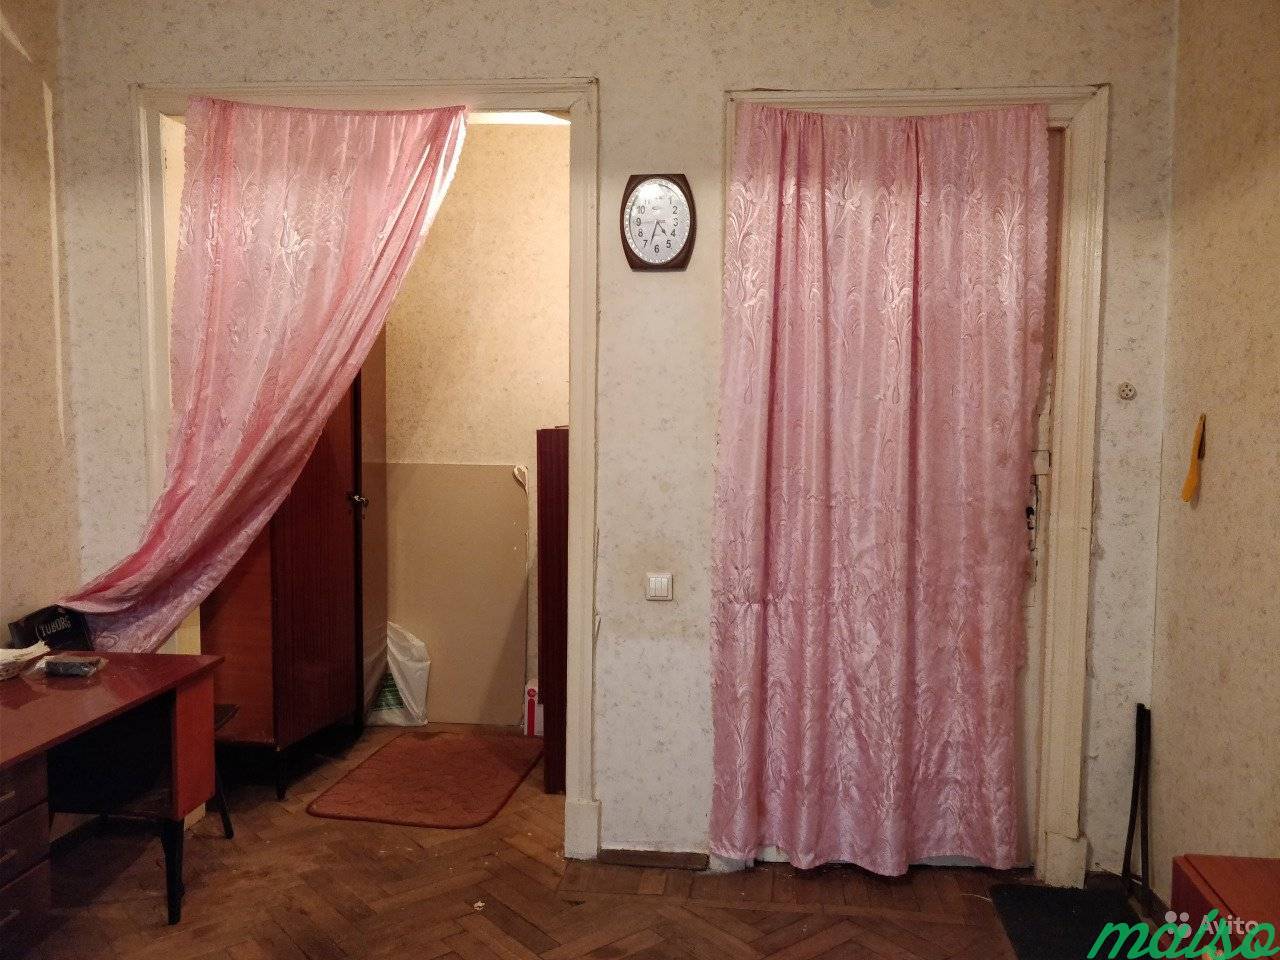 Комната 19.5 м² в 4-к, 3/4 эт. в Санкт-Петербурге. Фото 4